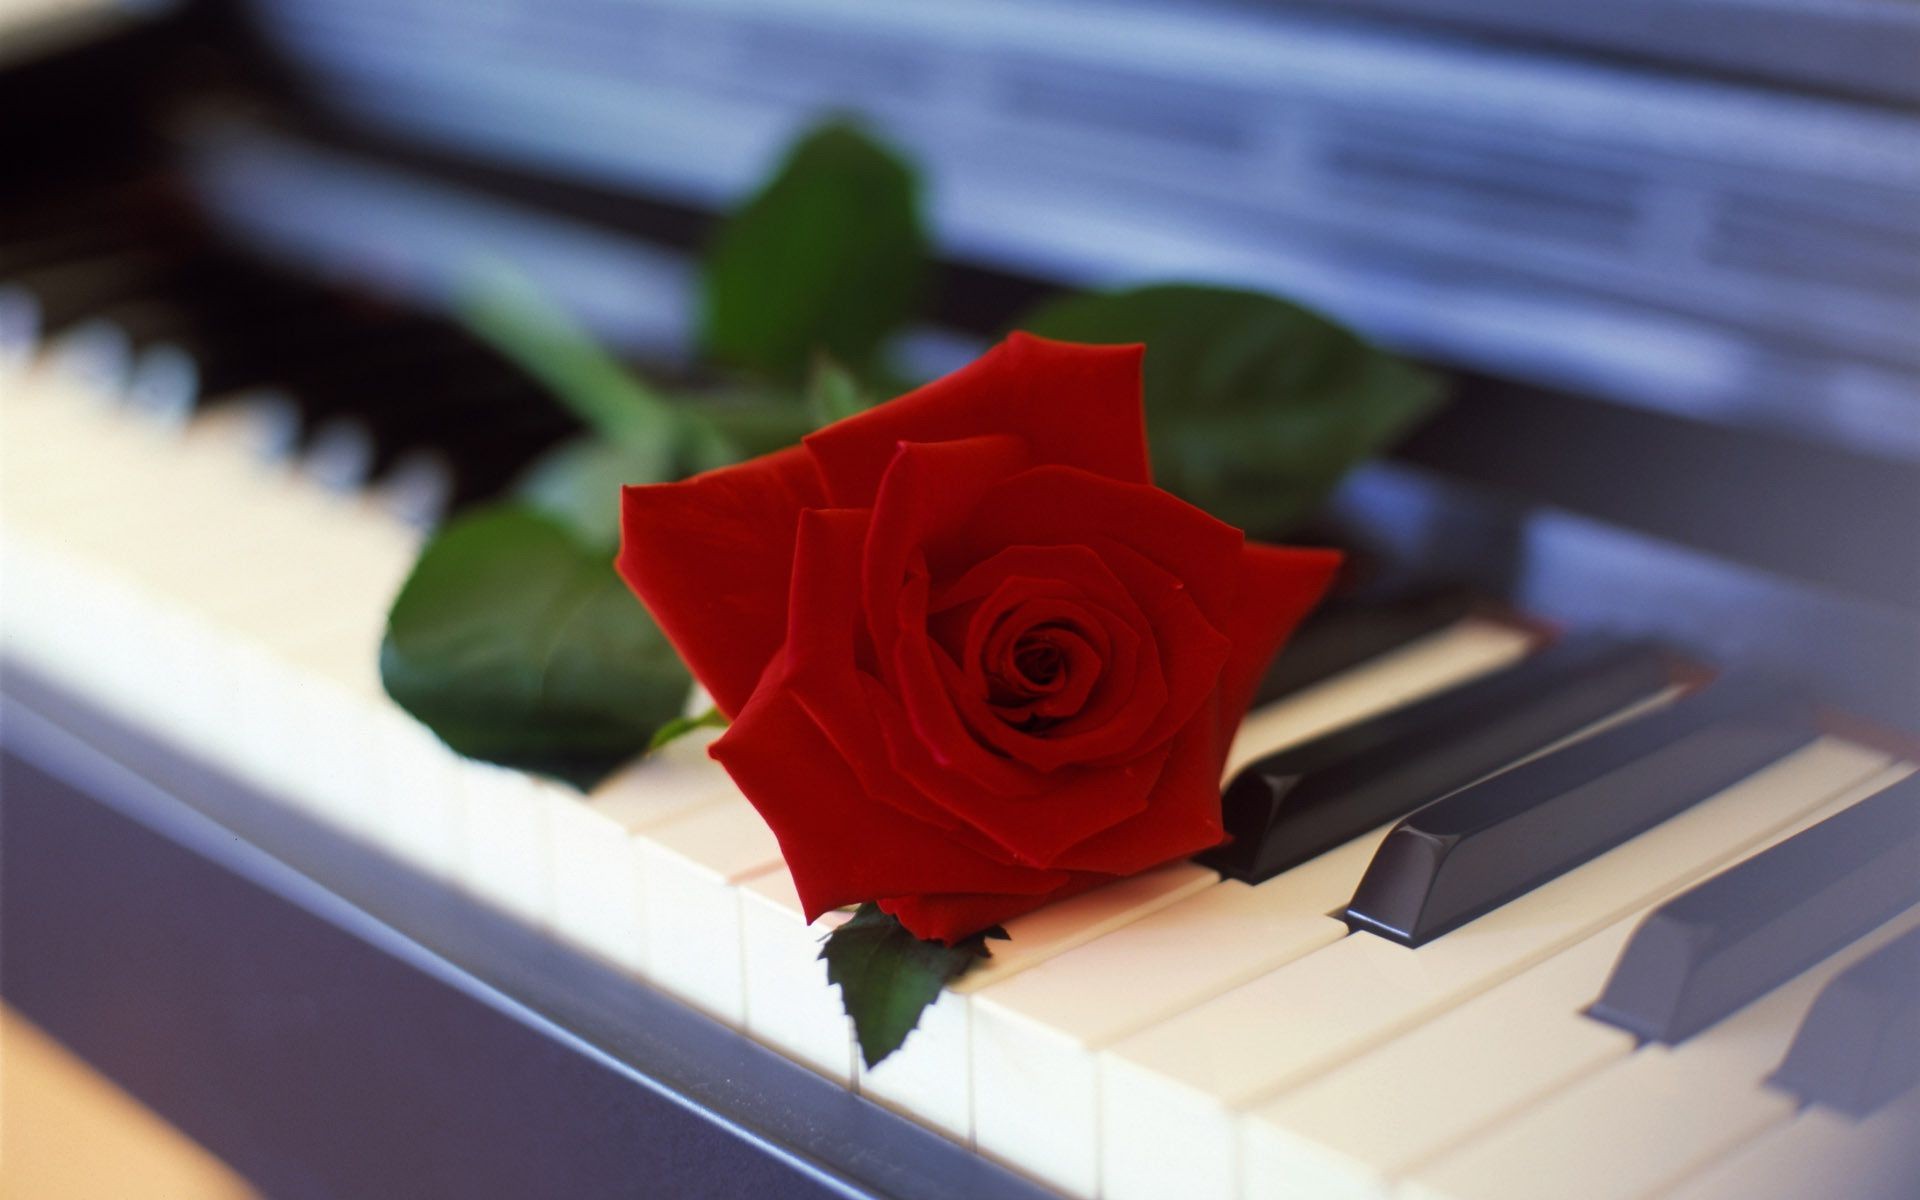 rose piano flower sound music ivory harmony instrument keyboard song key note ebony romance love jazz chord